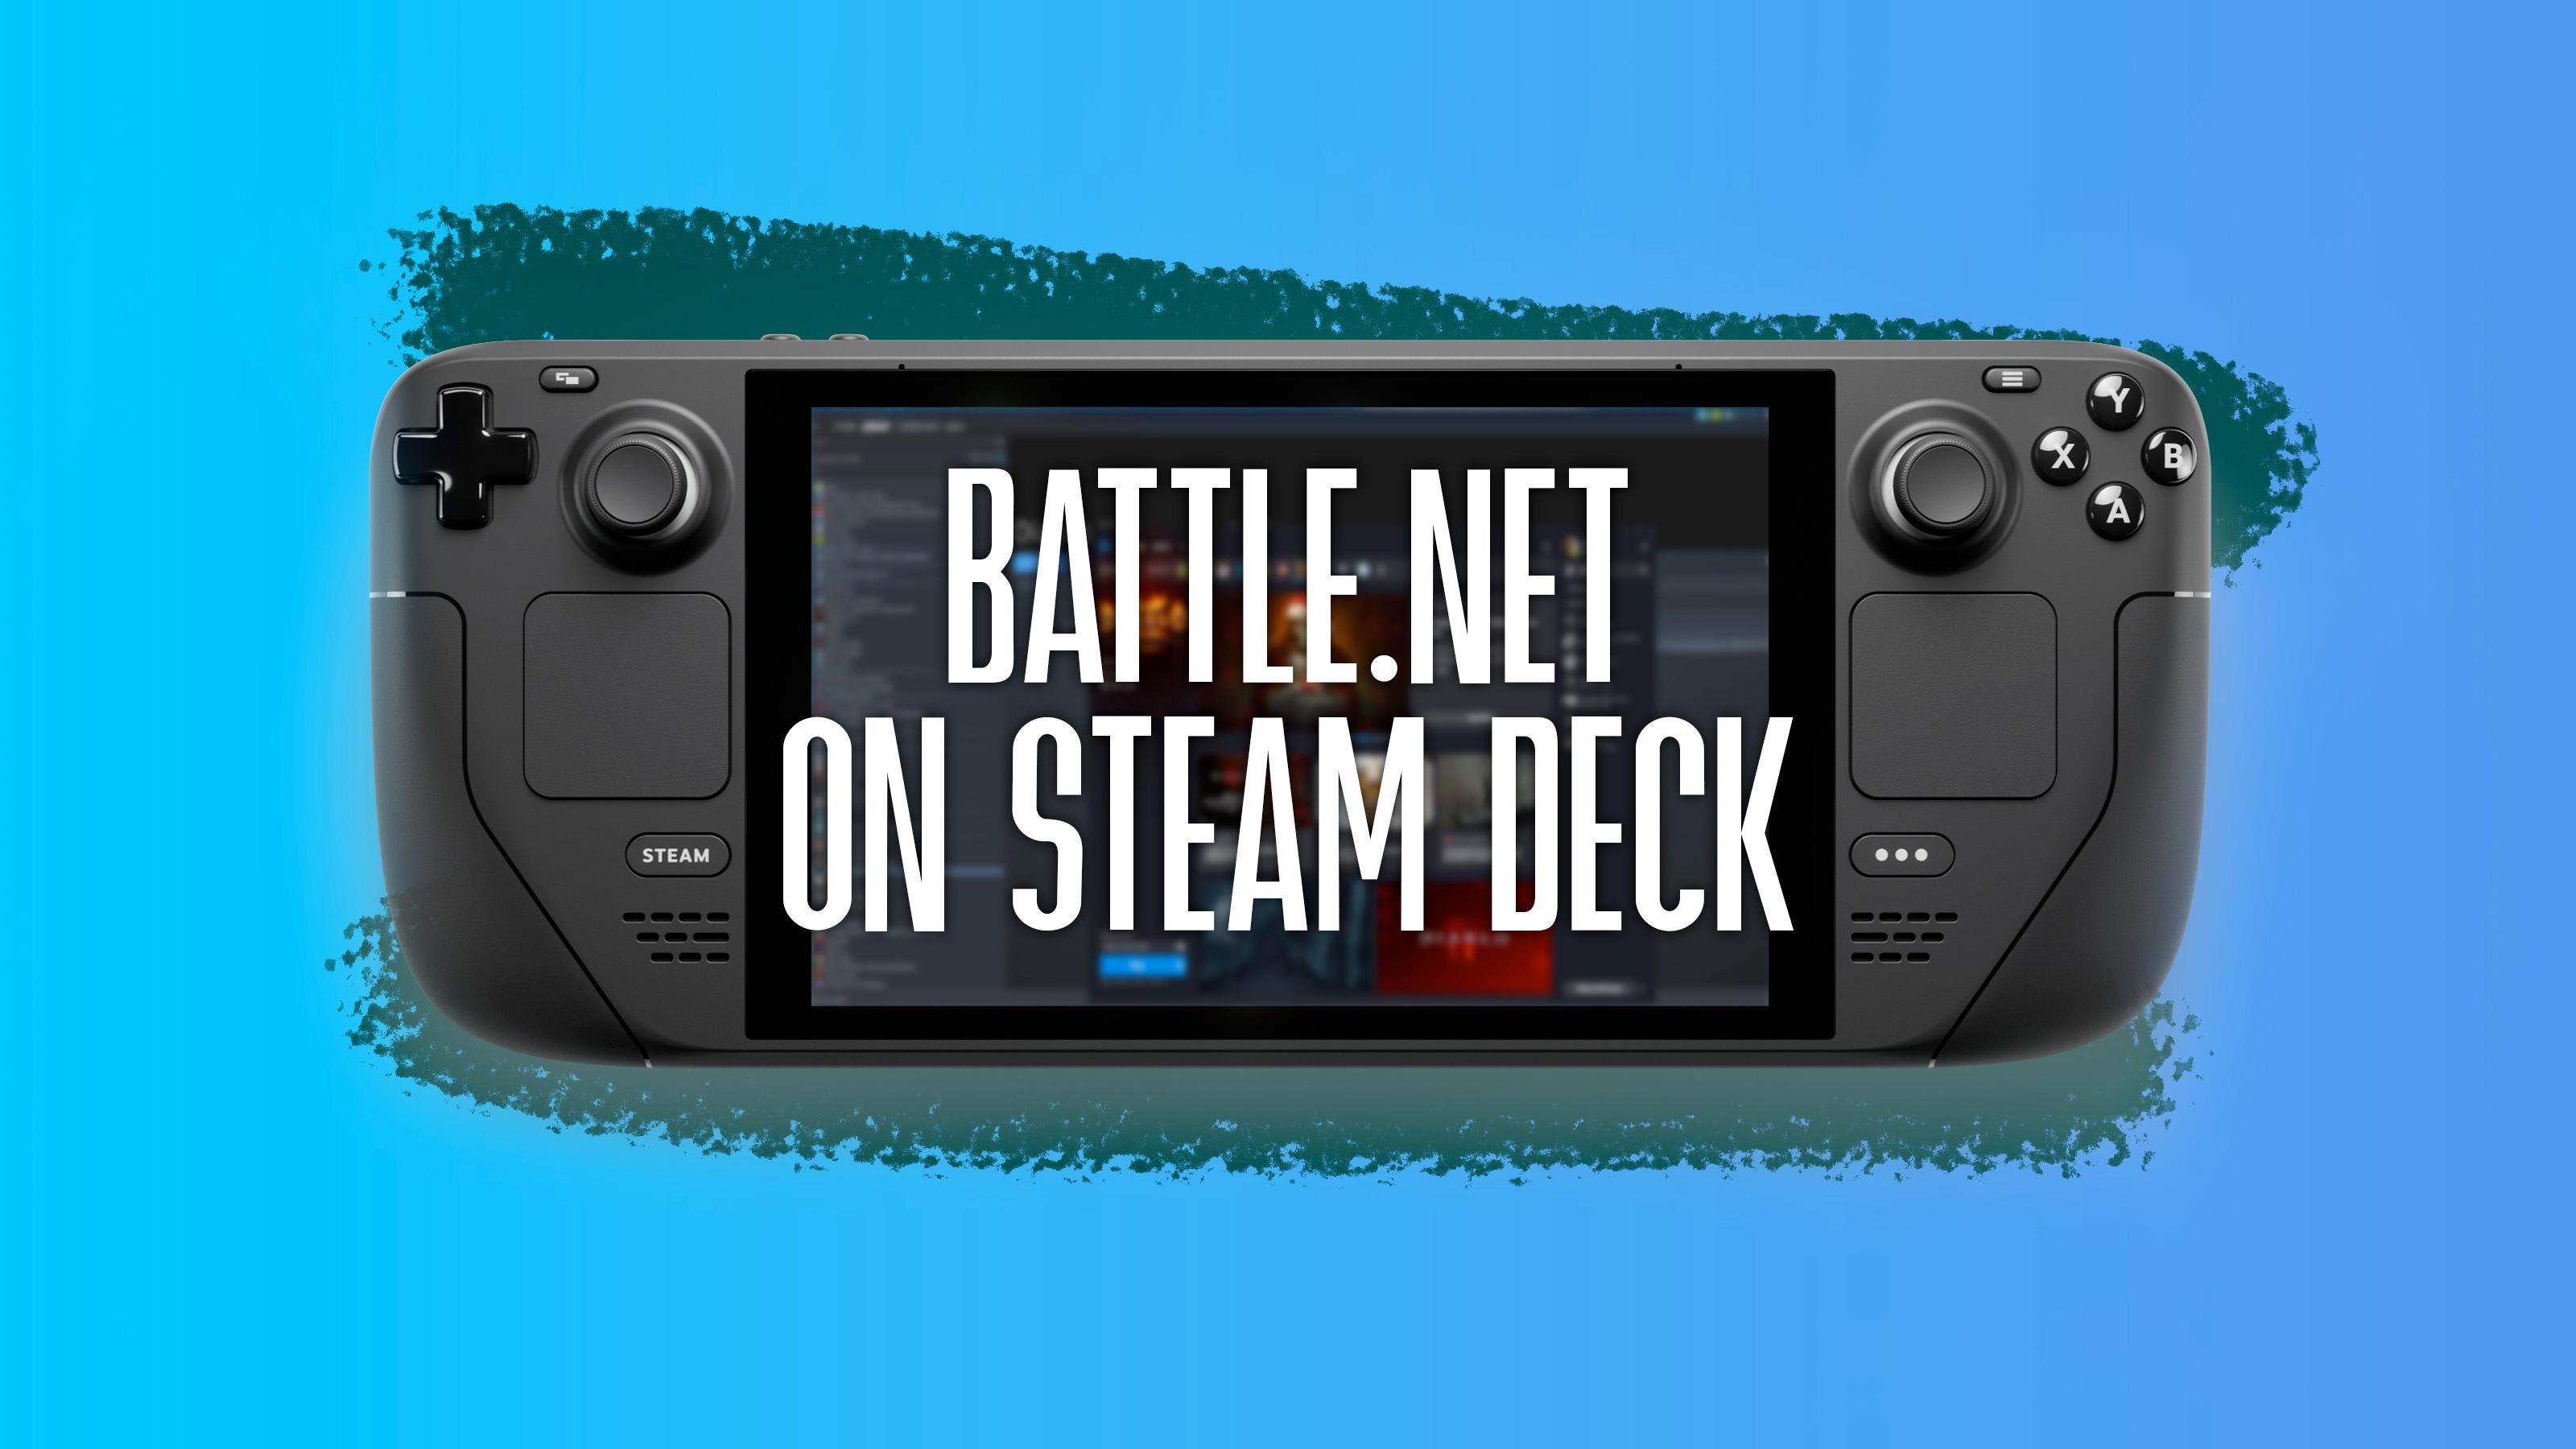 Steam Deck with Battle.net on it